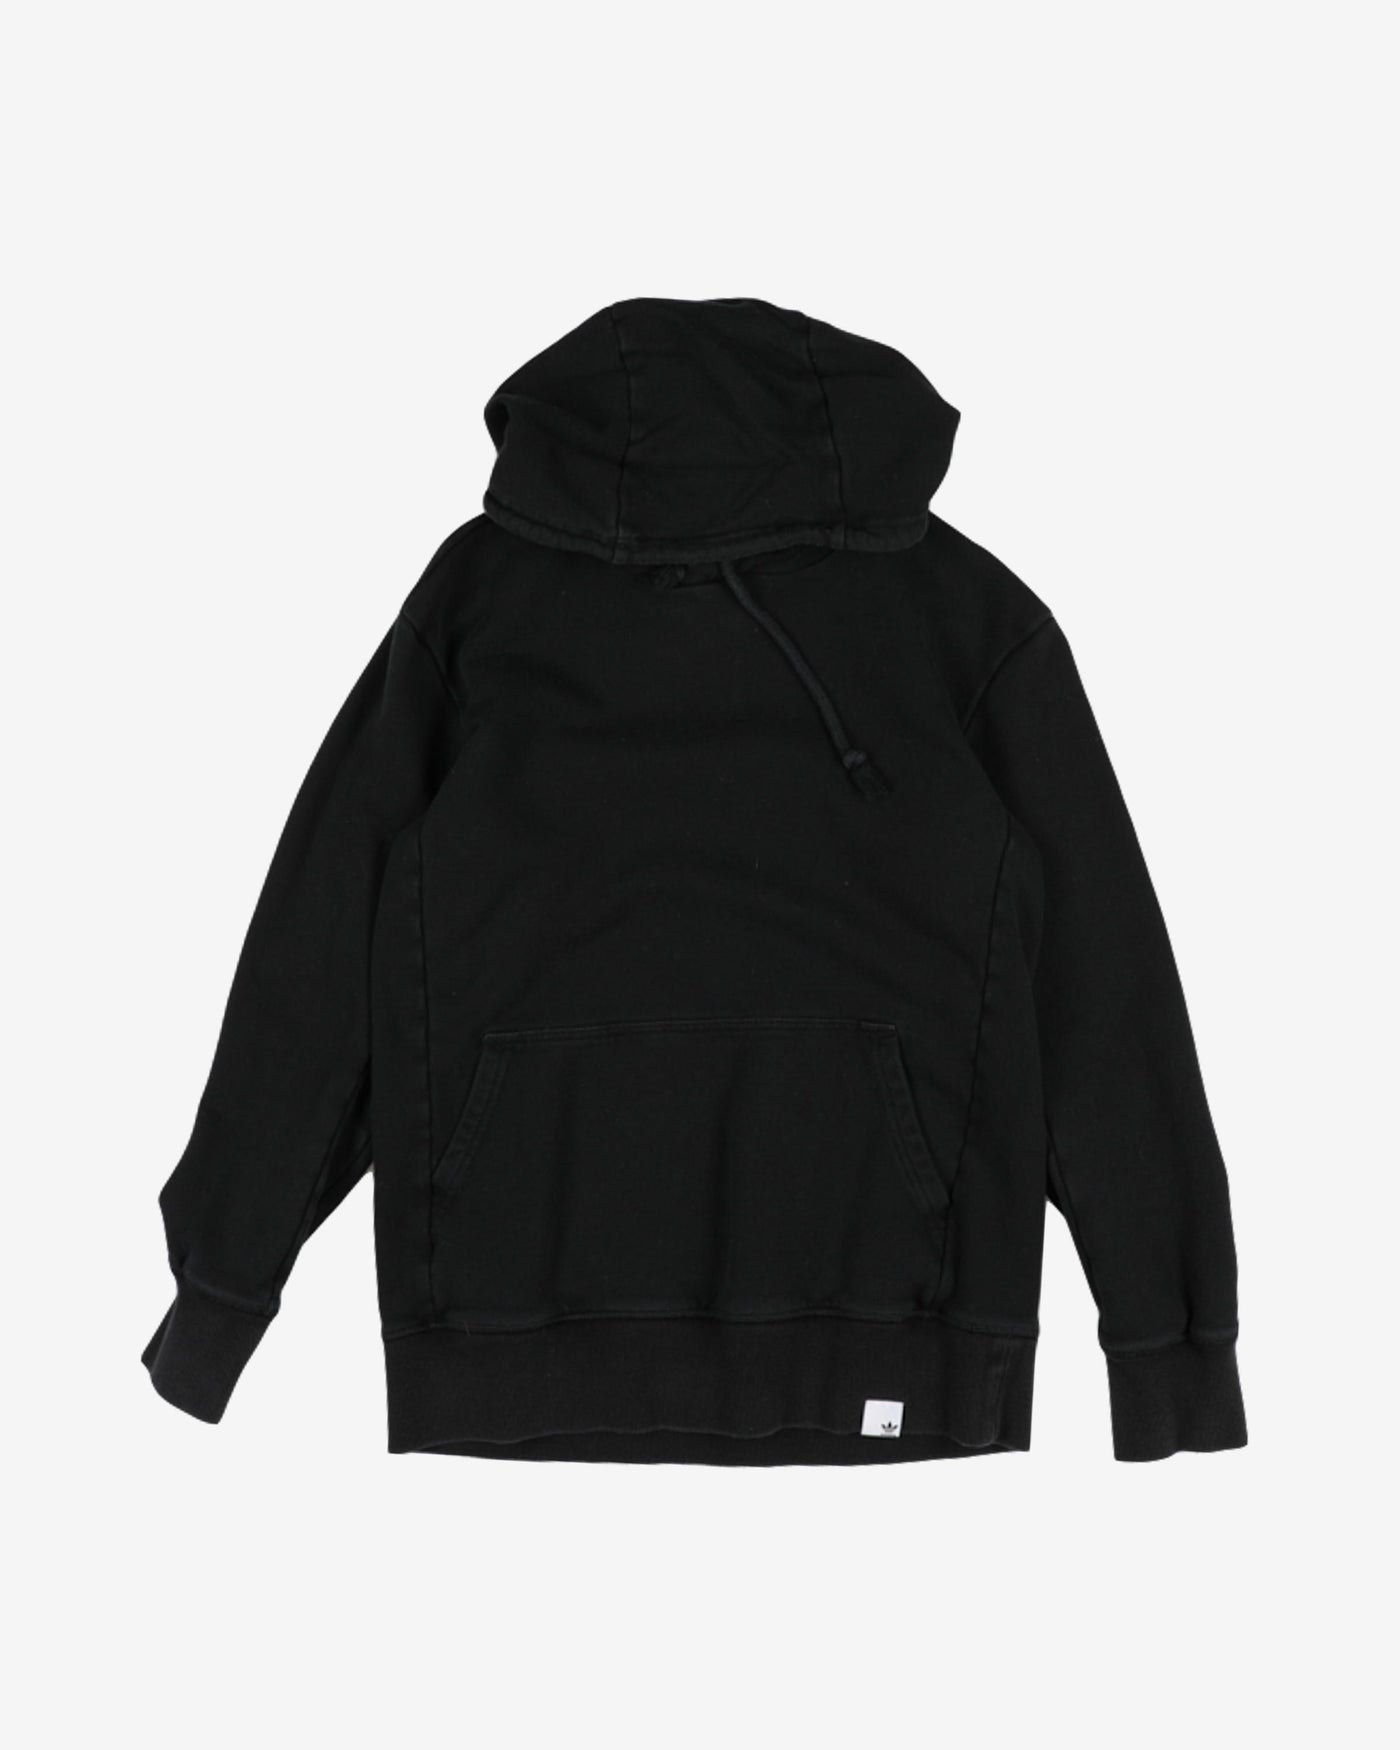 Adidas Black Plain Hooded Sweatshirt - XS